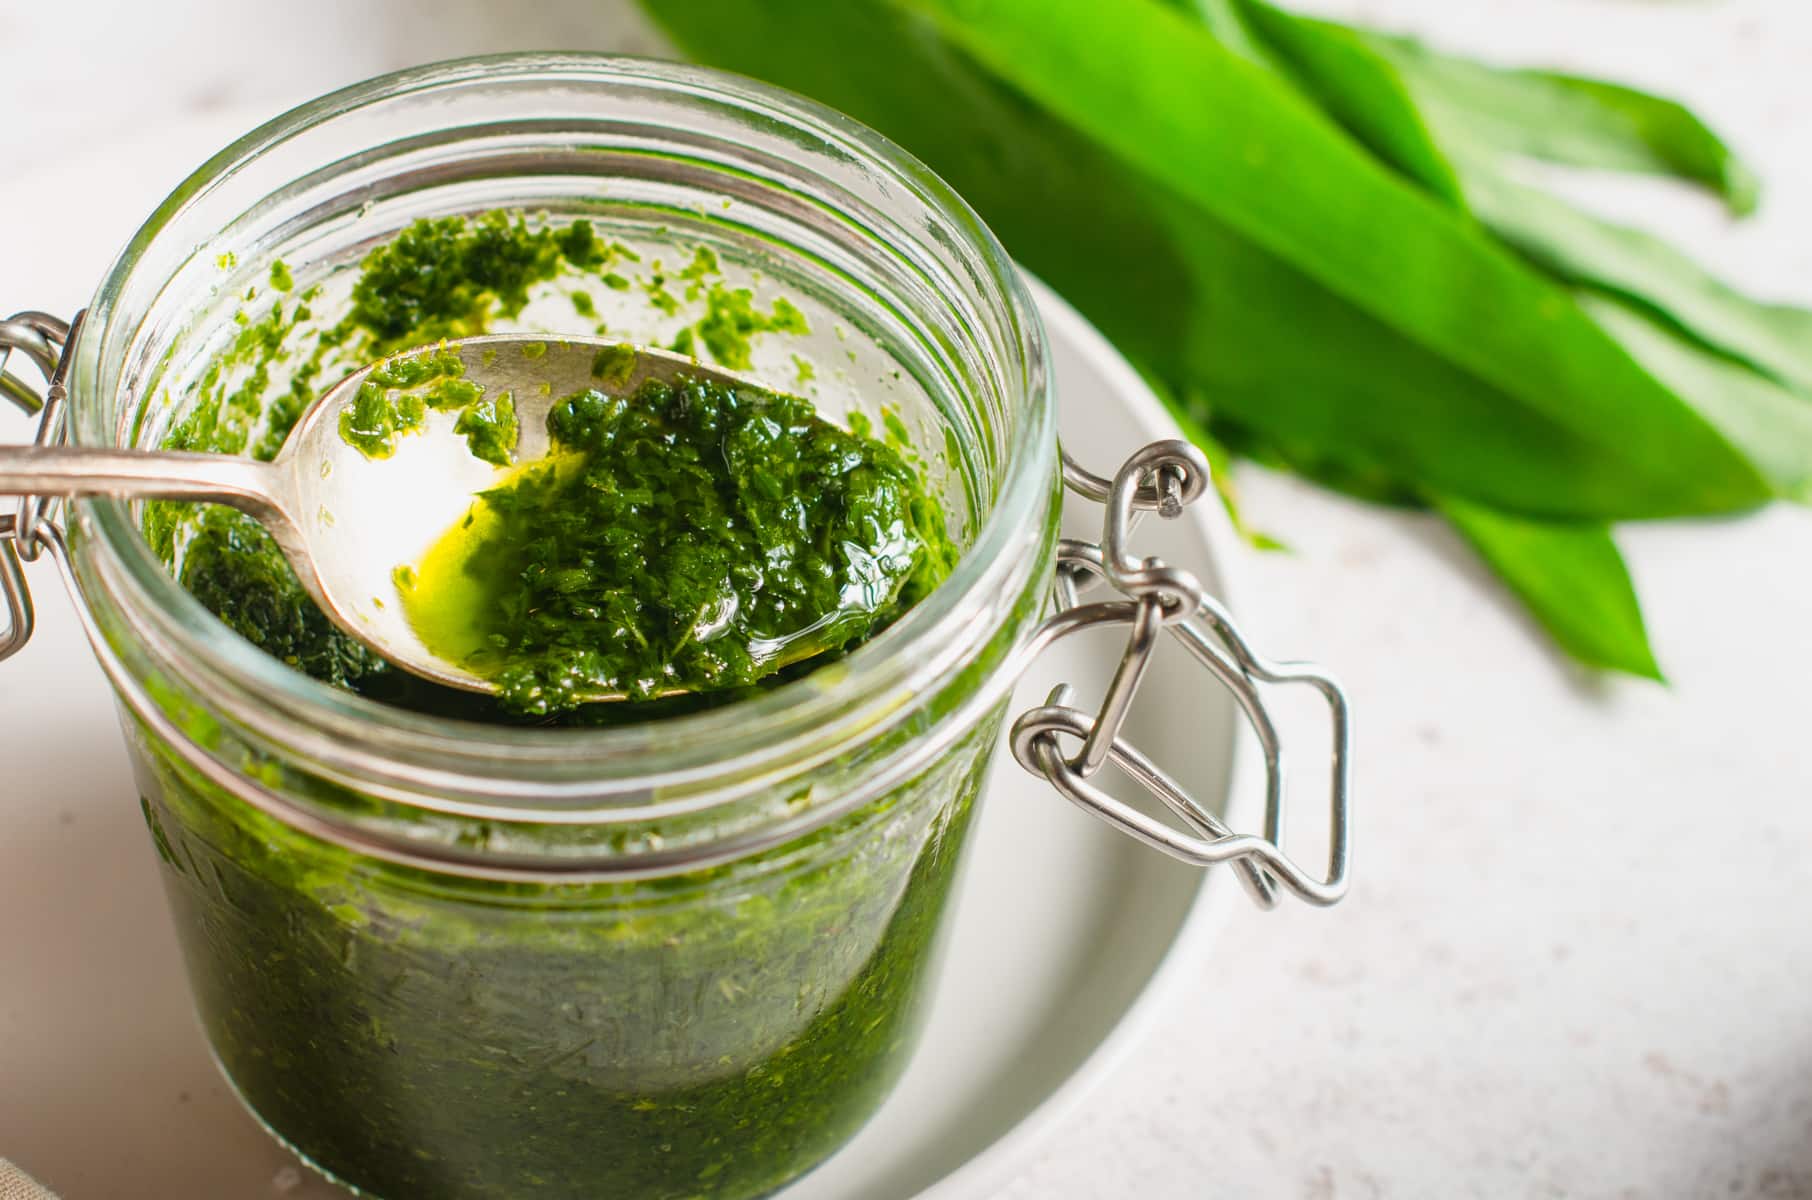 A jar of vibrant green wild garlic chimichurri sauce